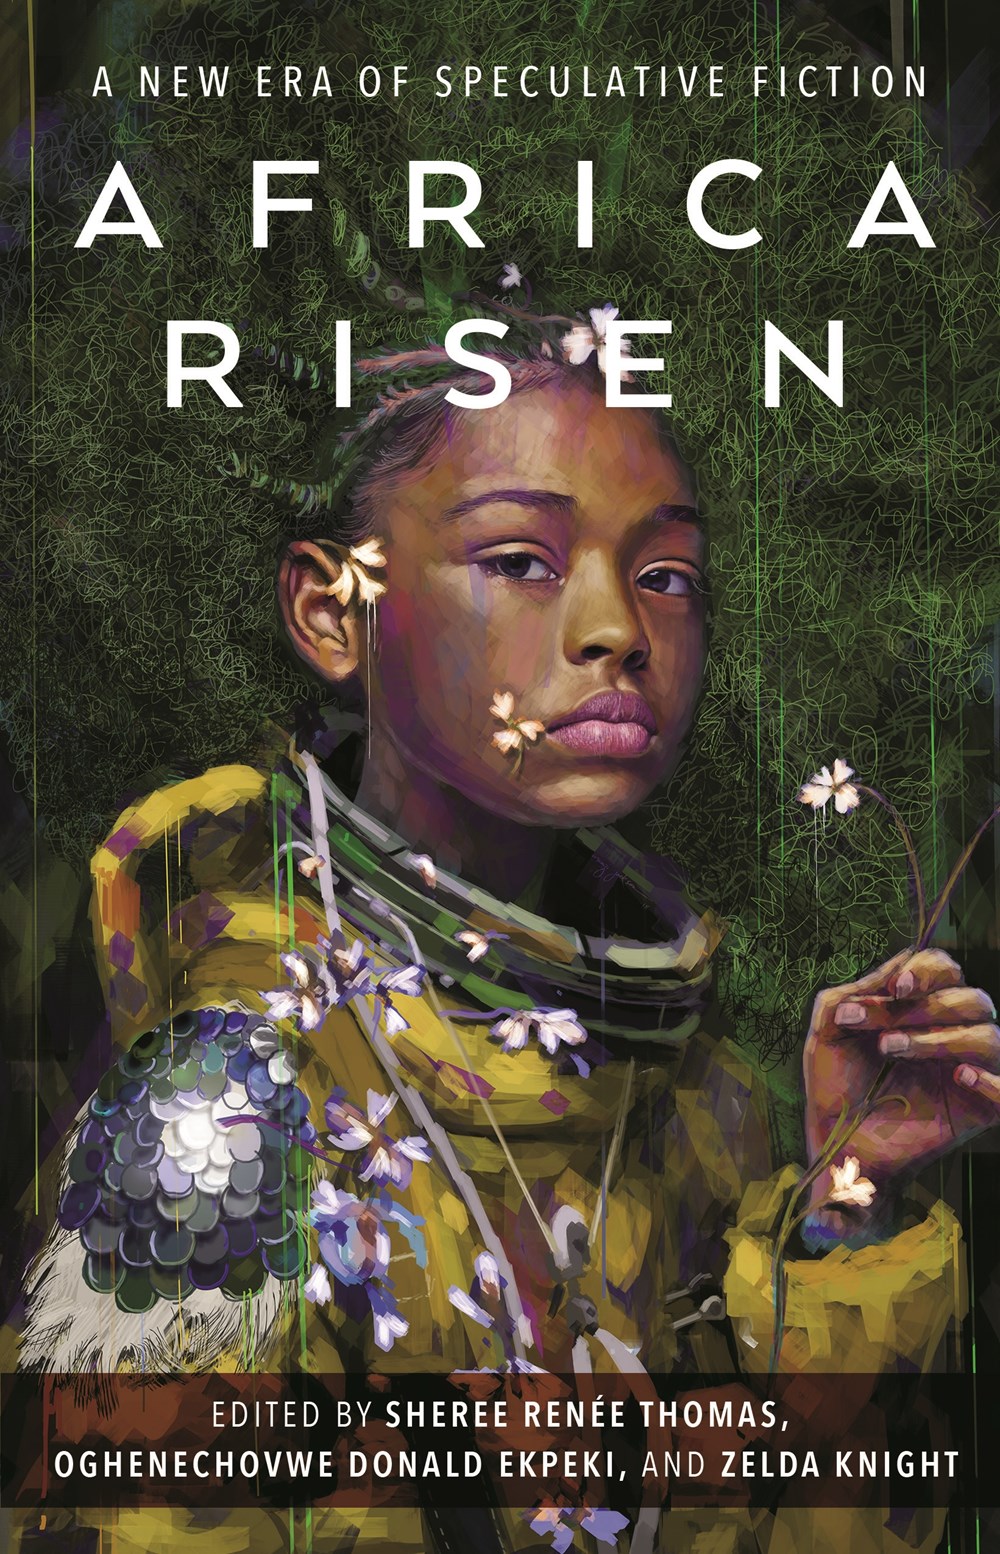 African Risen: A New Era of Speculative Fiction edited by Sheree Renée Thomas, Oghenechovwe Donald Ekpeki, Zelda Knight